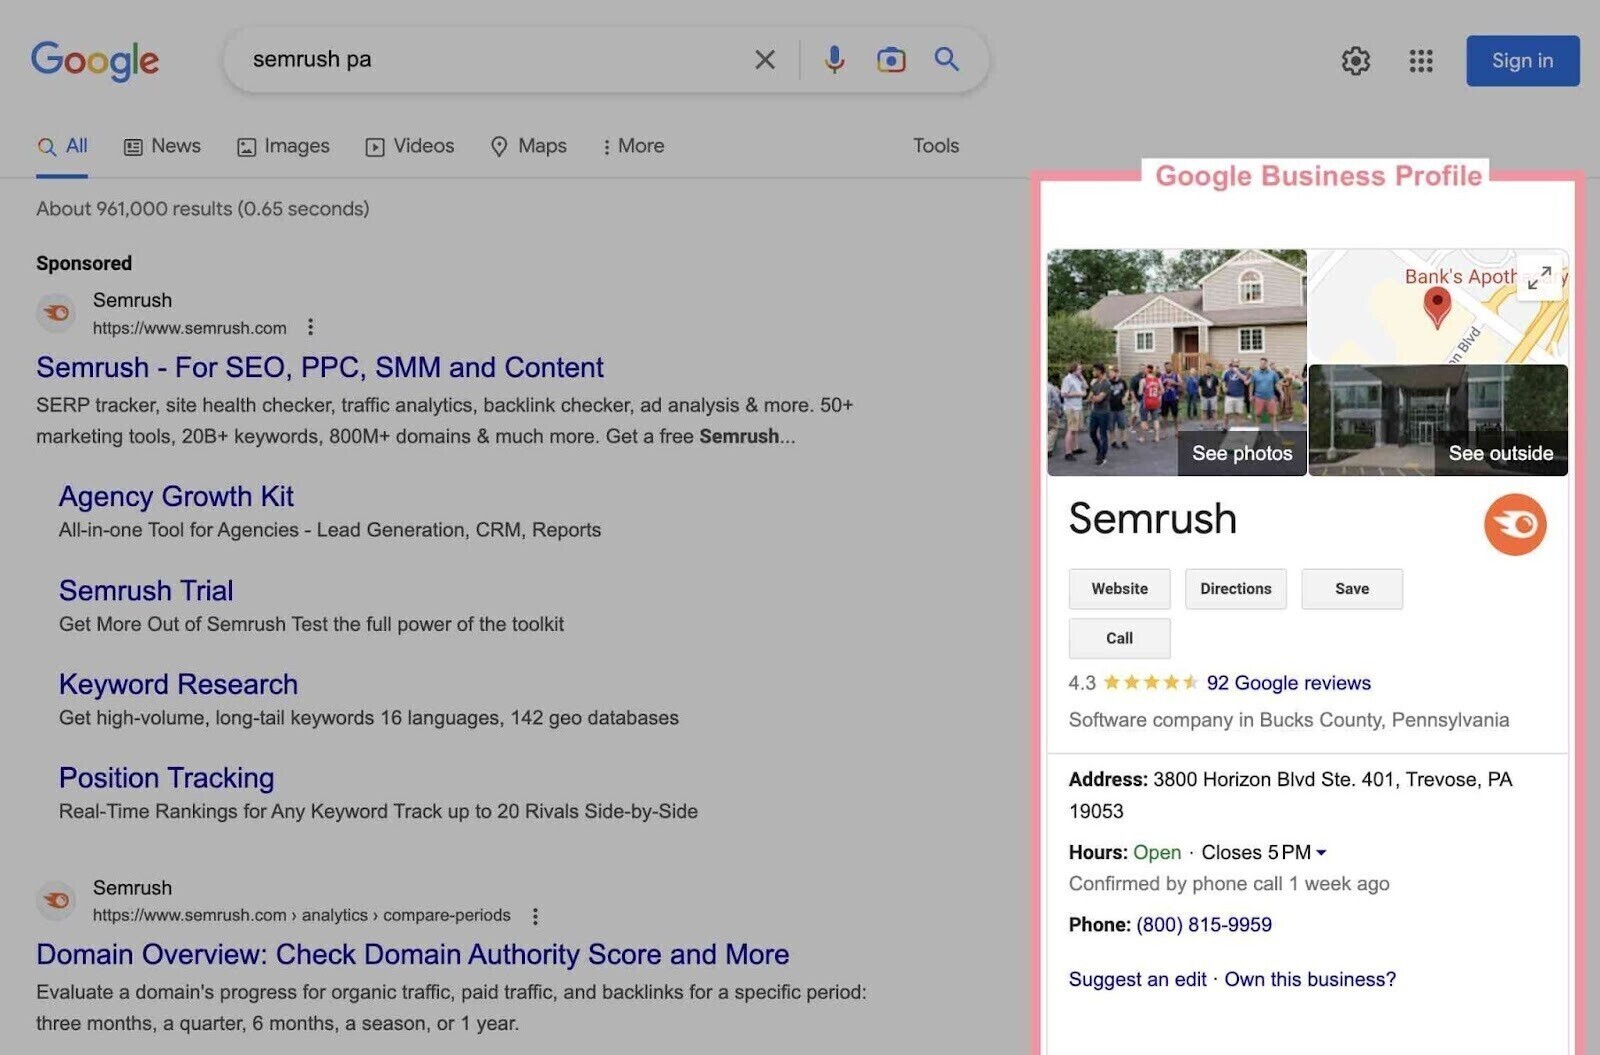 Semrush's Google business profile